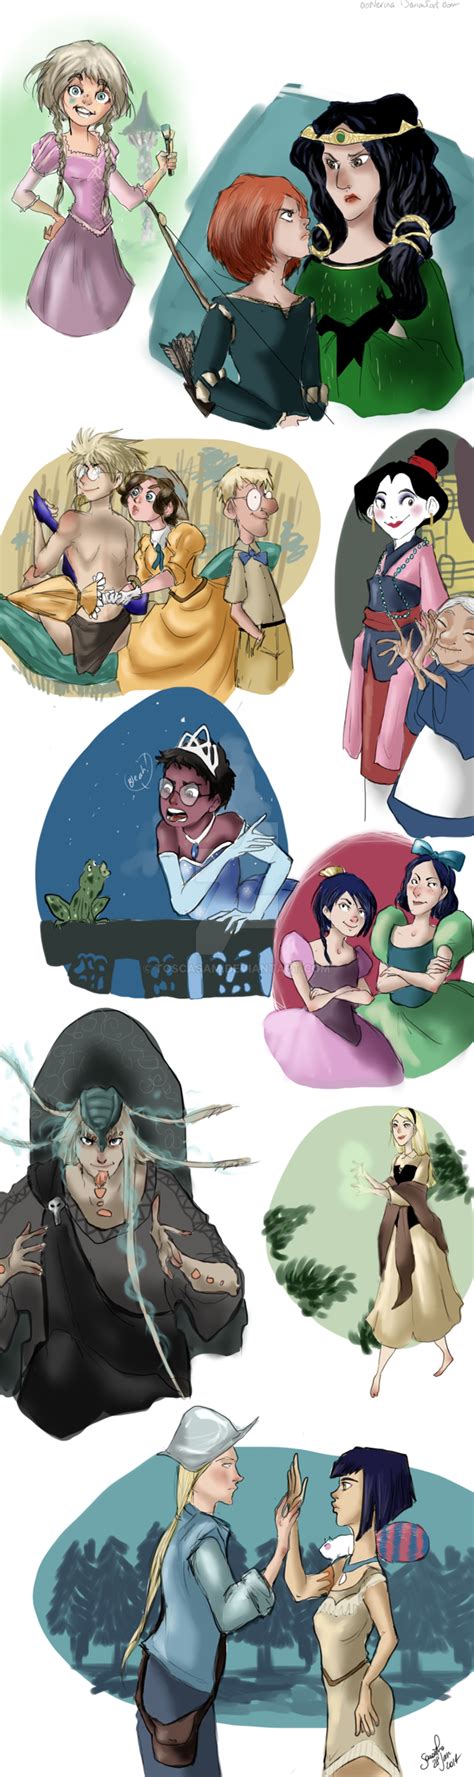 W.I.T.C.H. Disney Princesses crossover by NerinaSam on DeviantArt